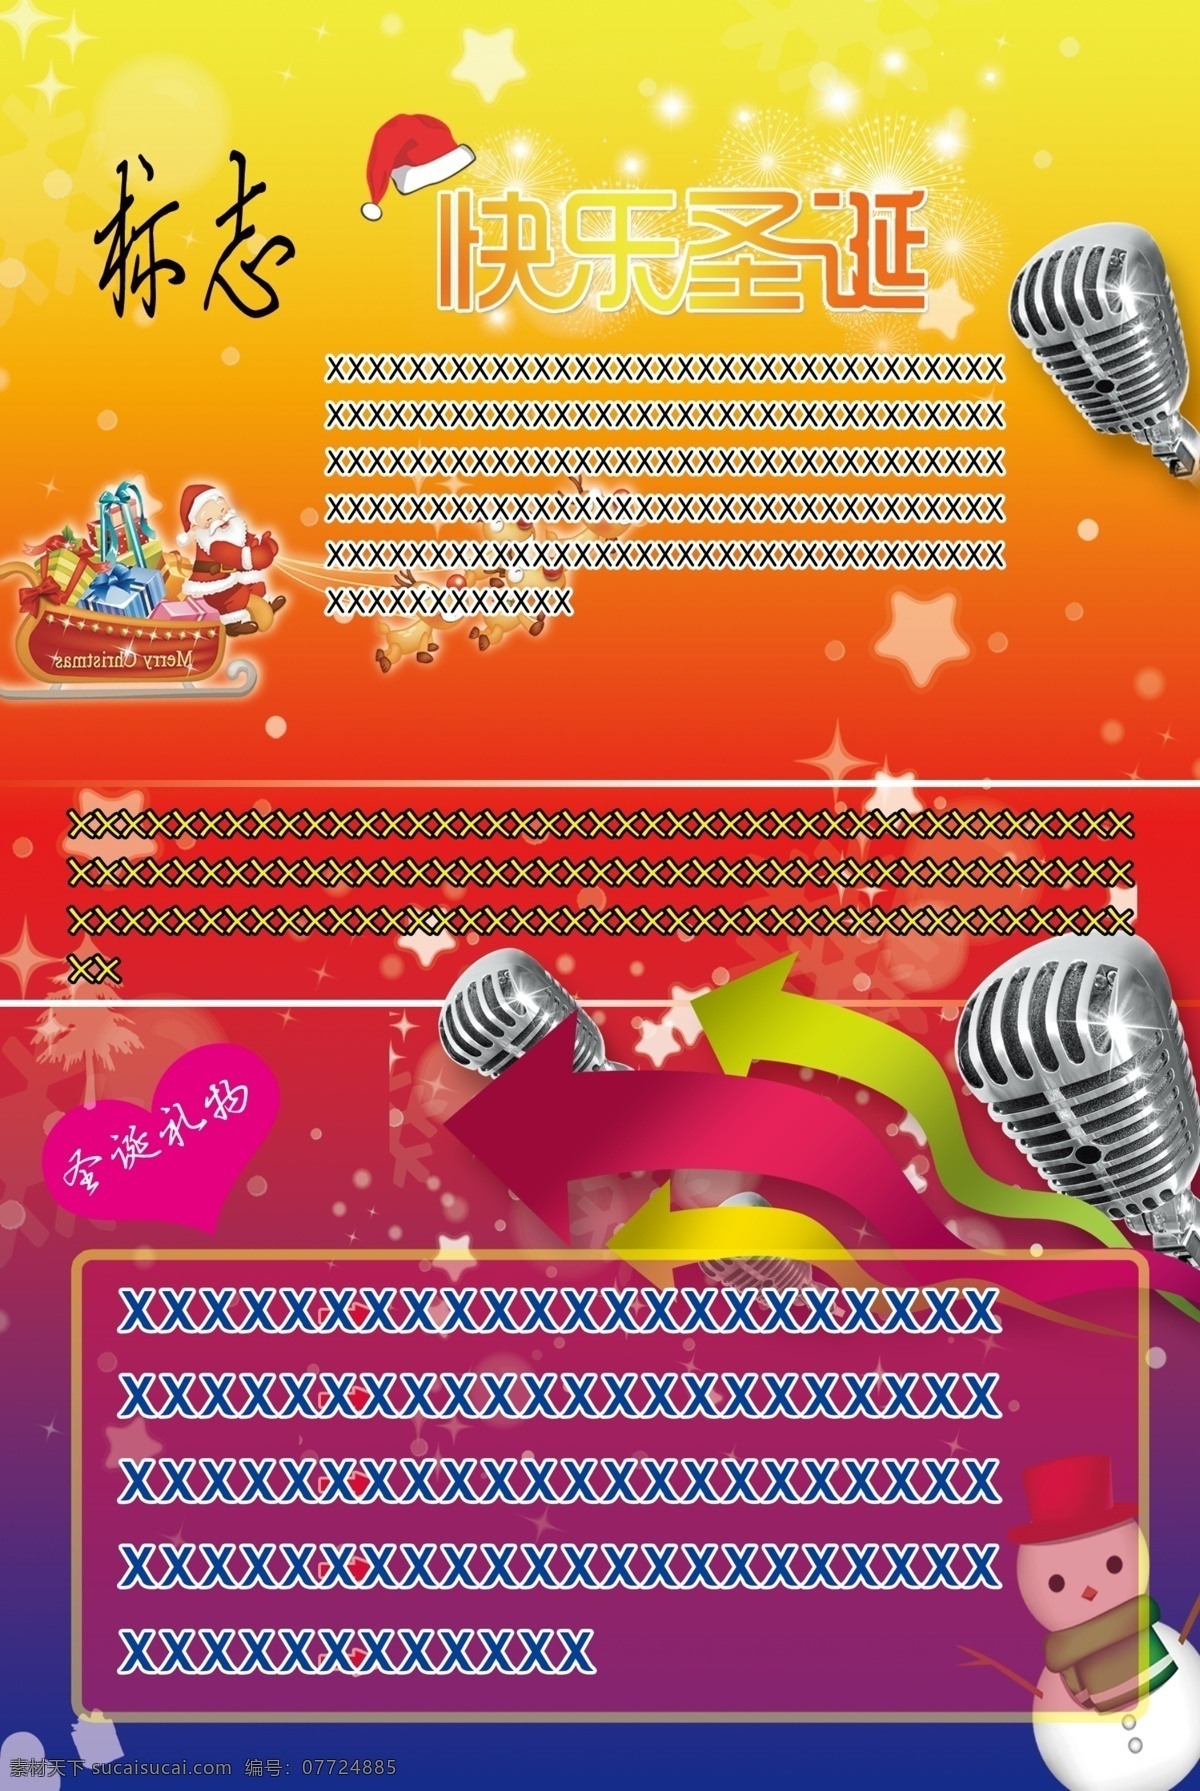 ktv ktv海报 圣诞 广告设计模板 圣诞素材 模板下载 雪人 源文件 其他海报设计